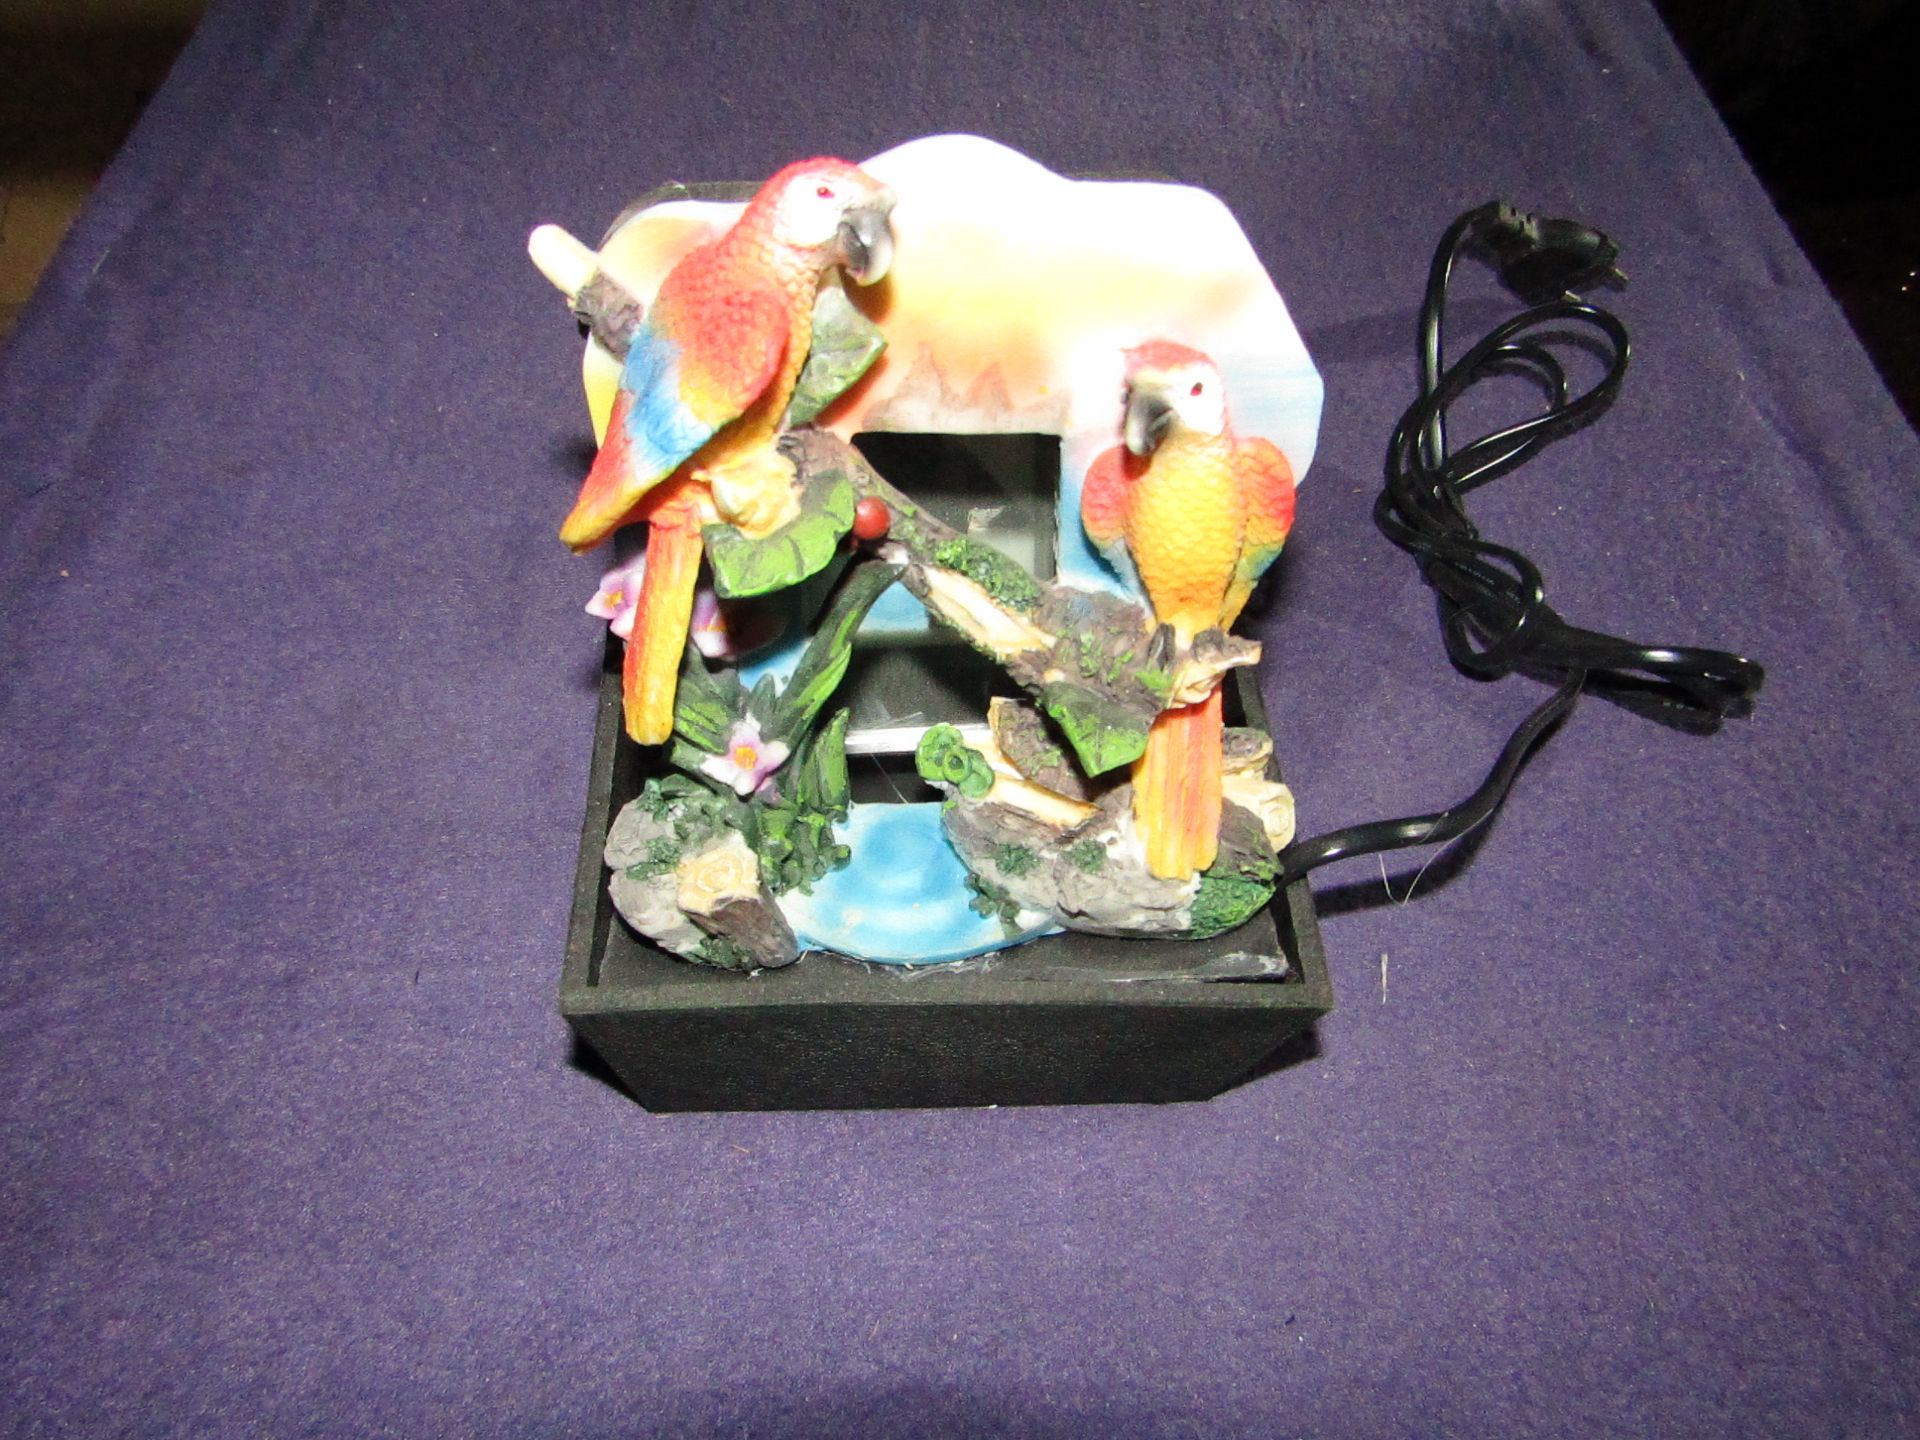 4x Katerina Souvenirs - Mini Parrot Water Feature ( EU Plugs ) - Unused & Boxed.